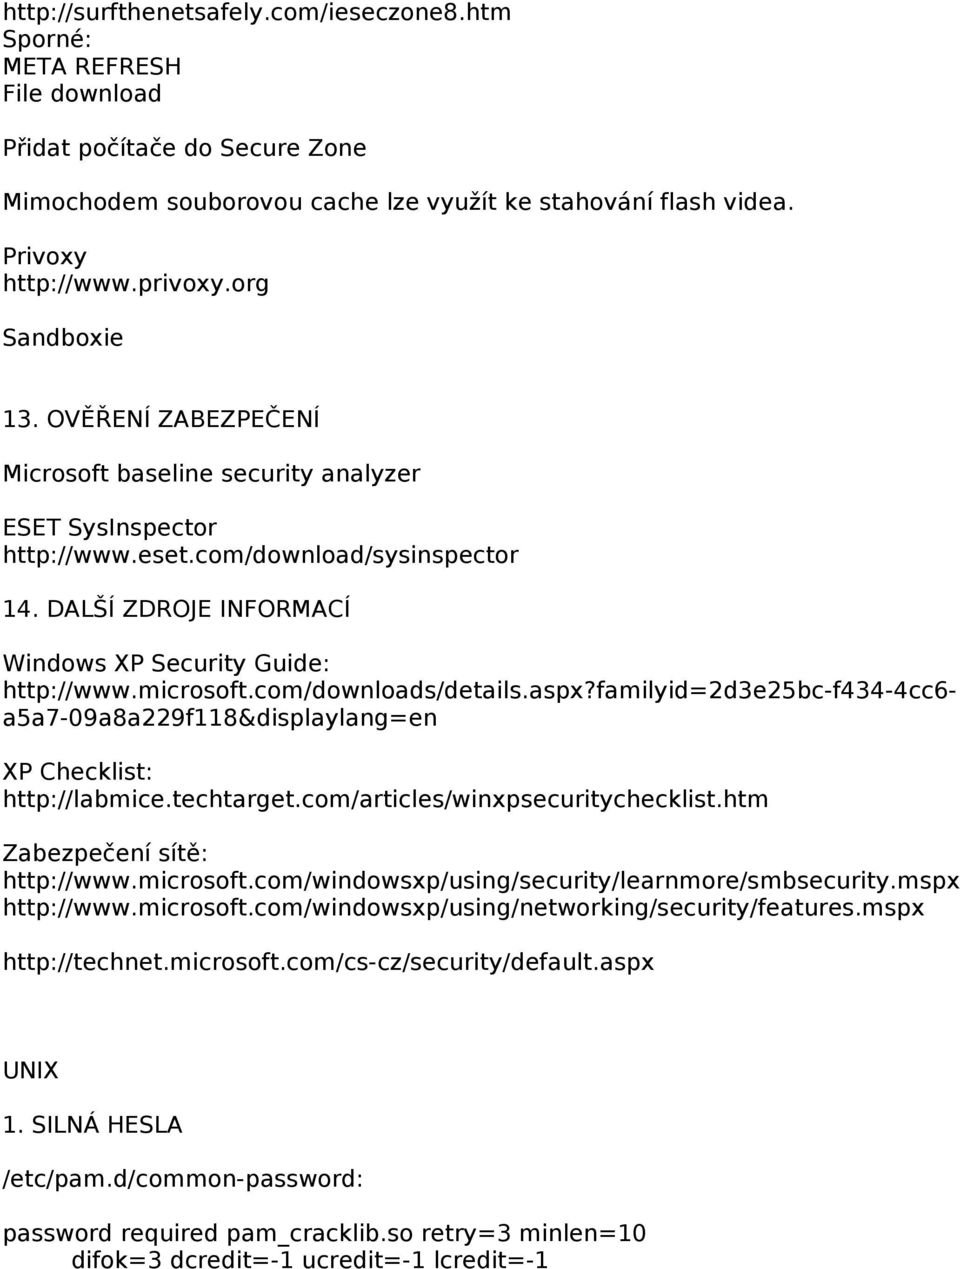 DALŠÍ ZDROJE INFORMACÍ Windows XP Security Guide: http://www.microsoft.com/downloads/details.aspx?familyid=2d3e25bc-f434-4cc6- a5a7-09a8a229f118&displaylang=en XP Checklist: http://labmice.techtarget.